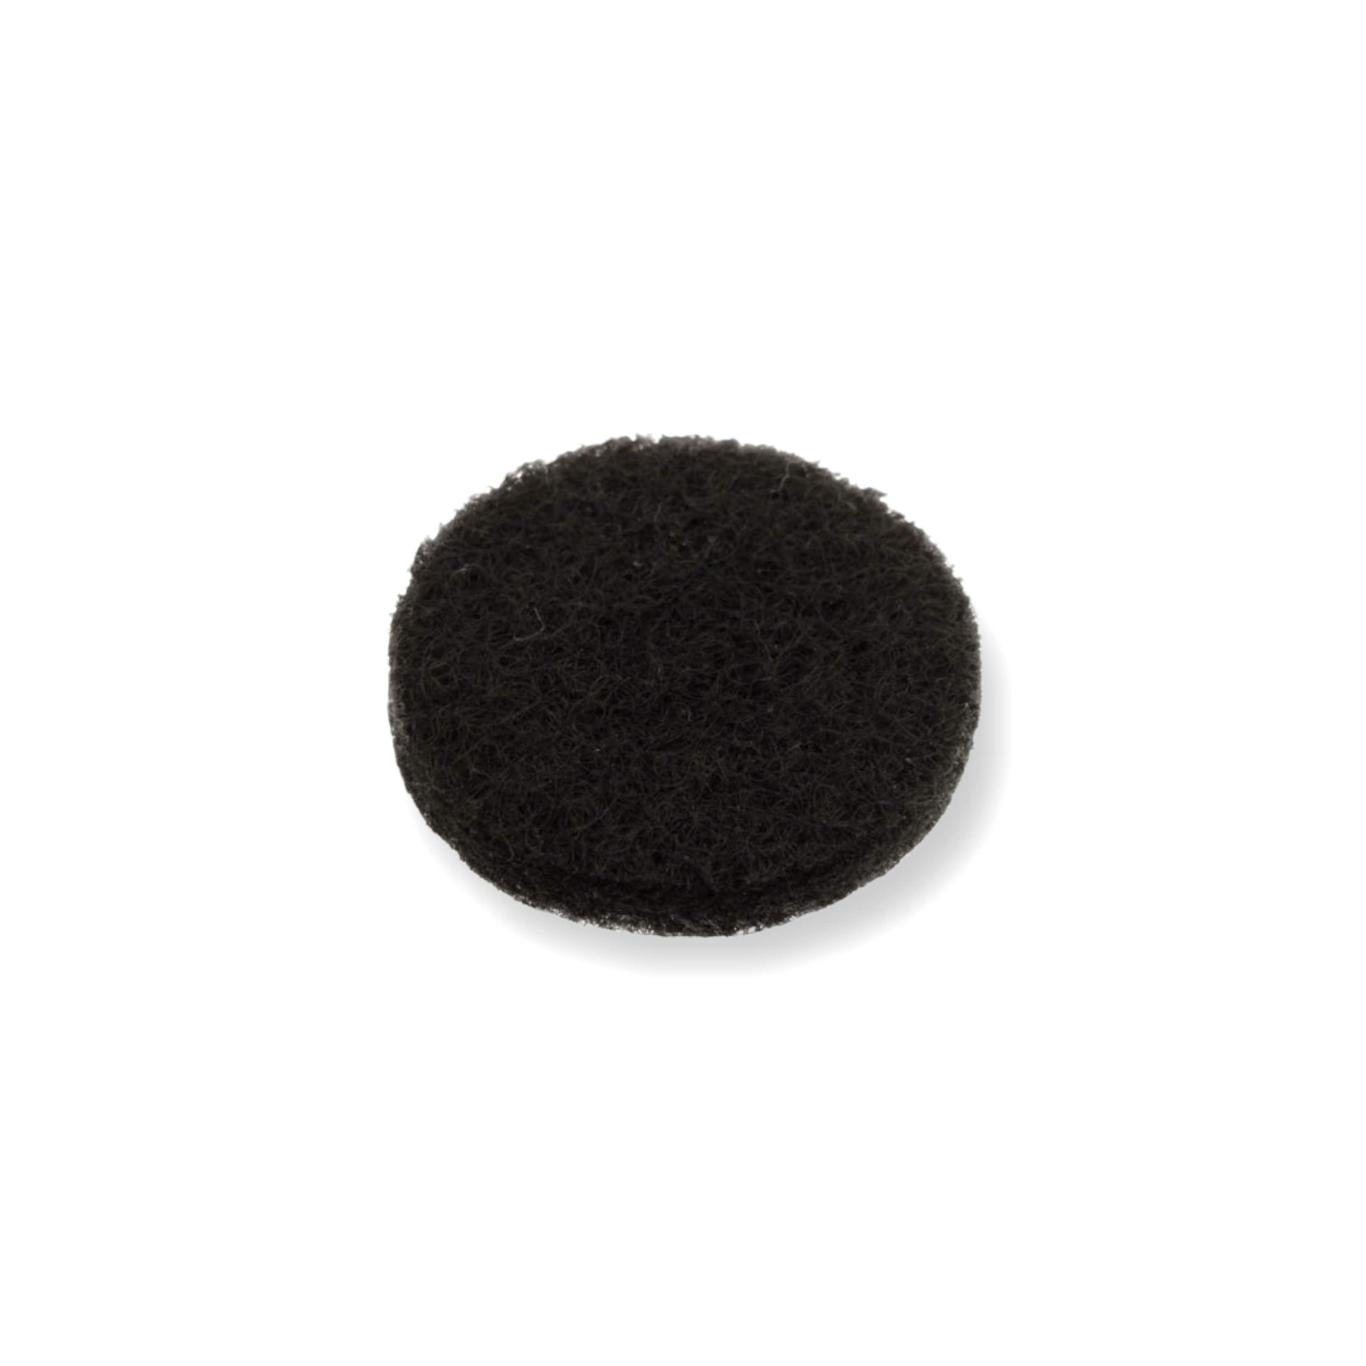 Felt Pads - Dark Brown Self Adhesive Stick on Felt - Round 35mm Diameter - Made in Germany